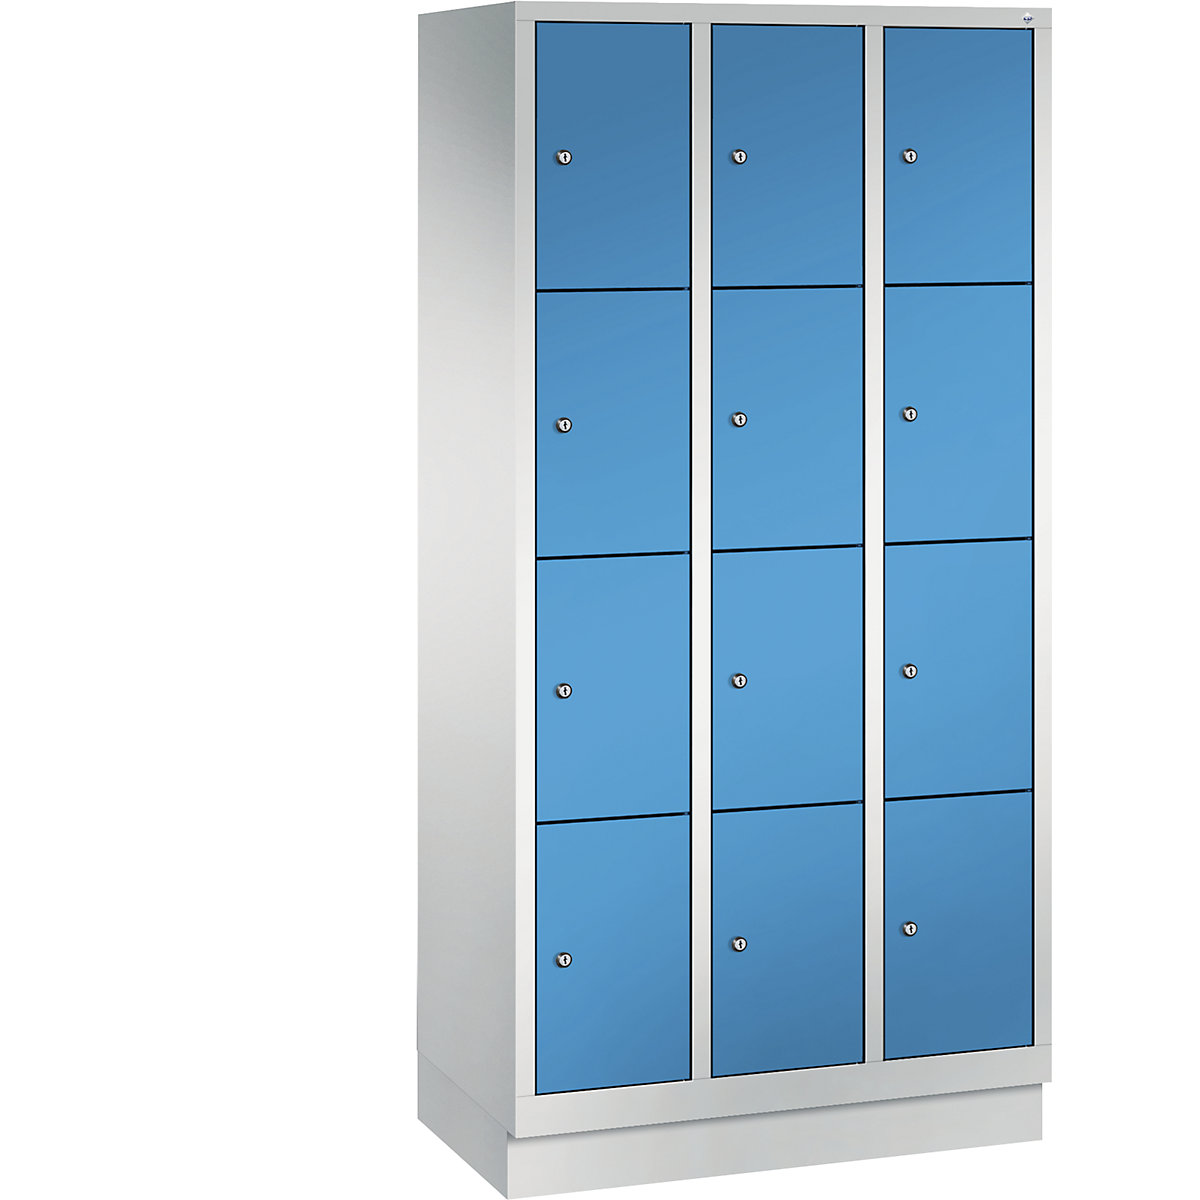 CLASSIC locker unit with plinth – C+P, 3 compartments, 4 shelf compartments each, compartment width 300 mm, light grey / light blue-15